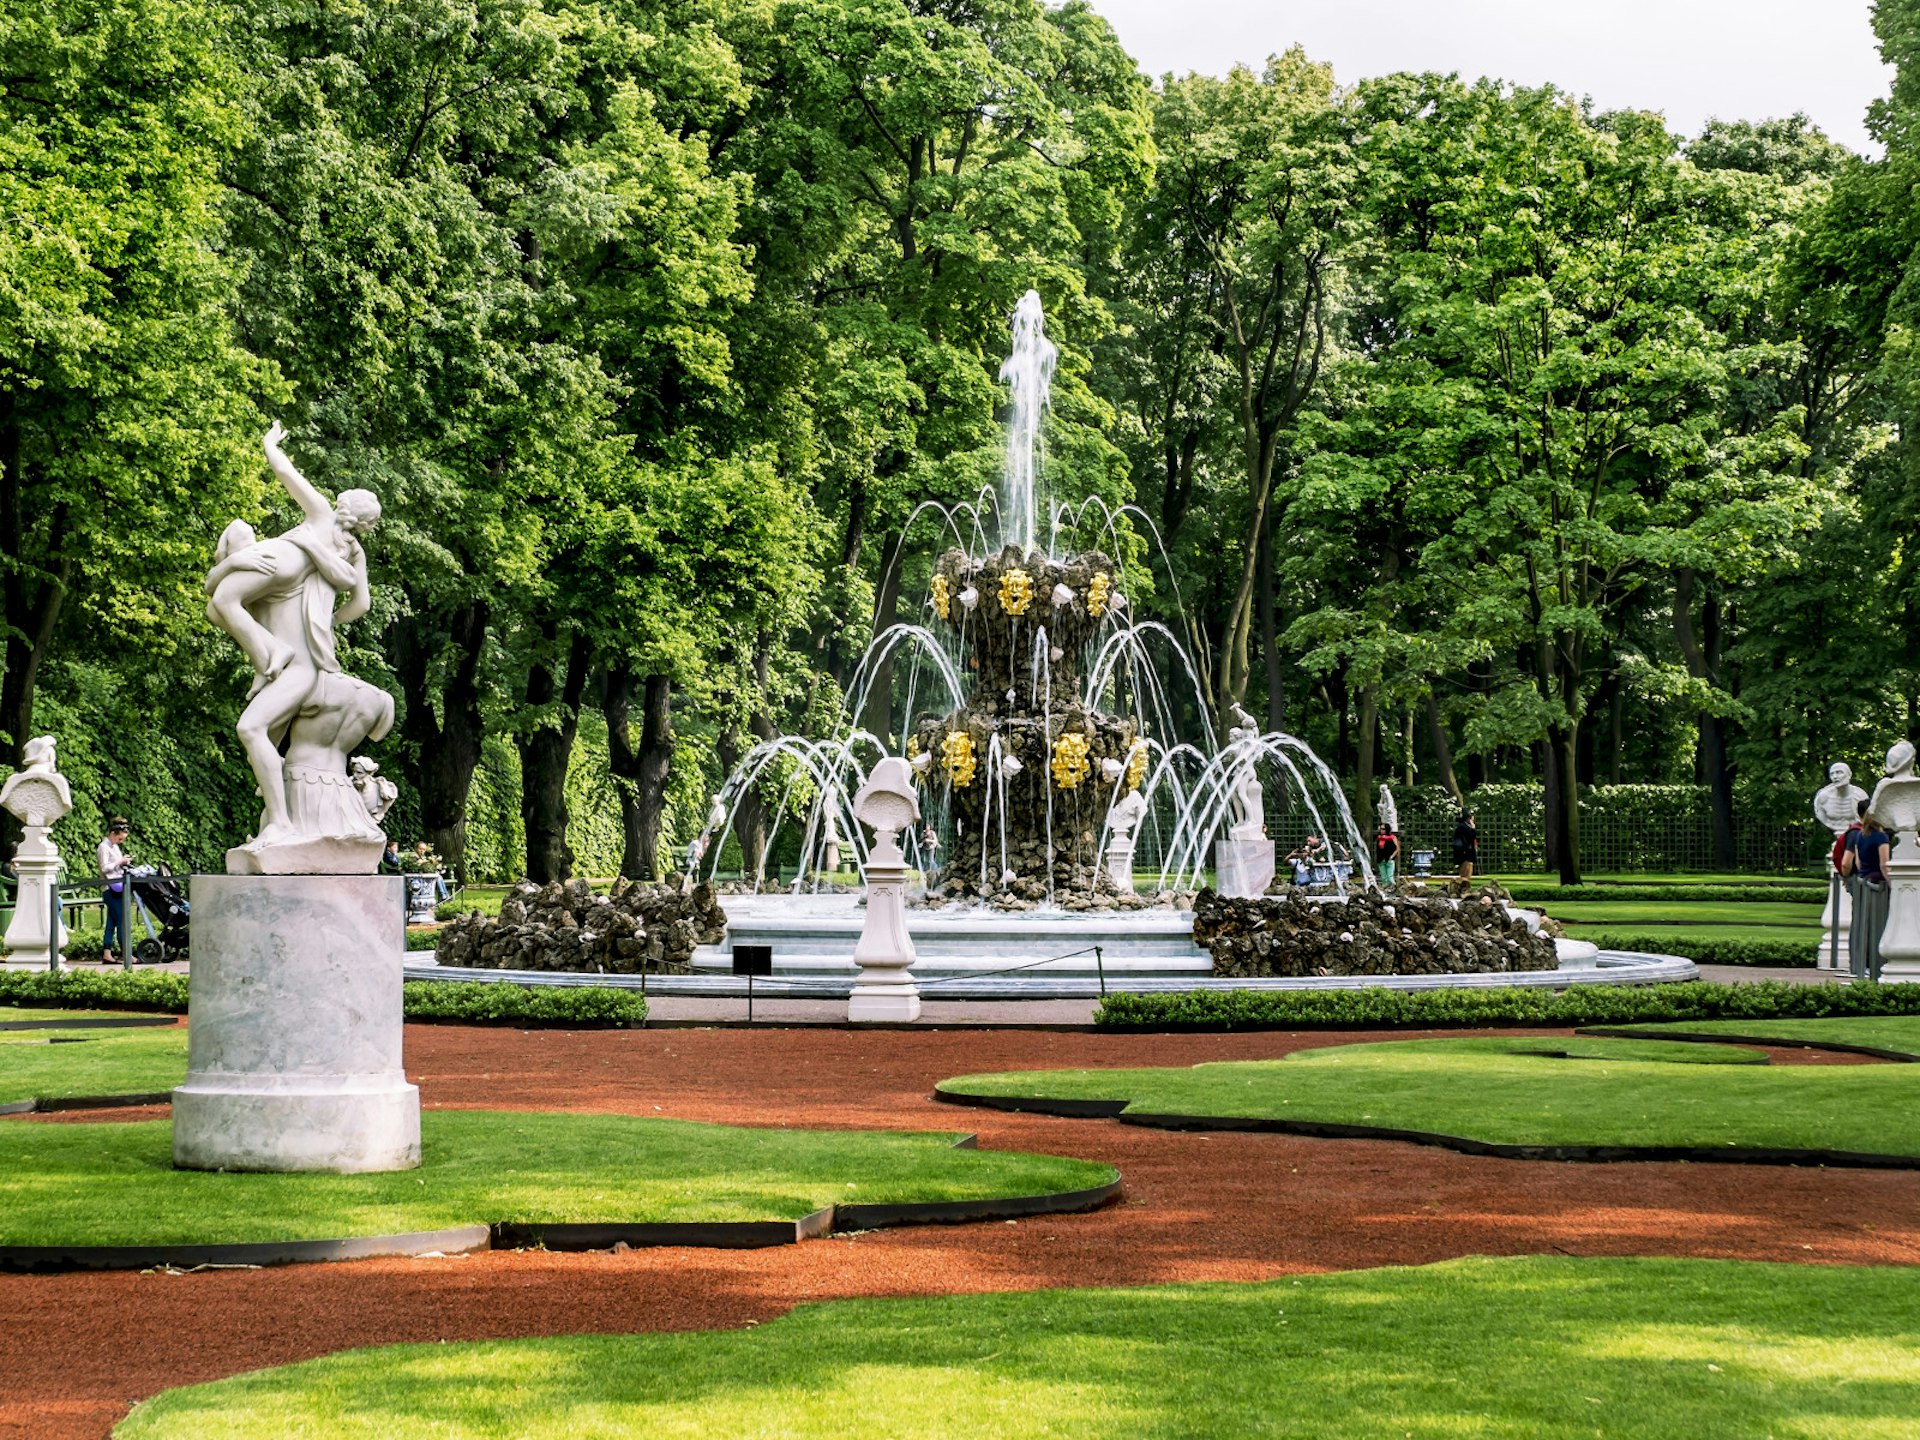 A striking fountain in St Petersburg's Summer Garden © Anton Kudelin / Shutterstock